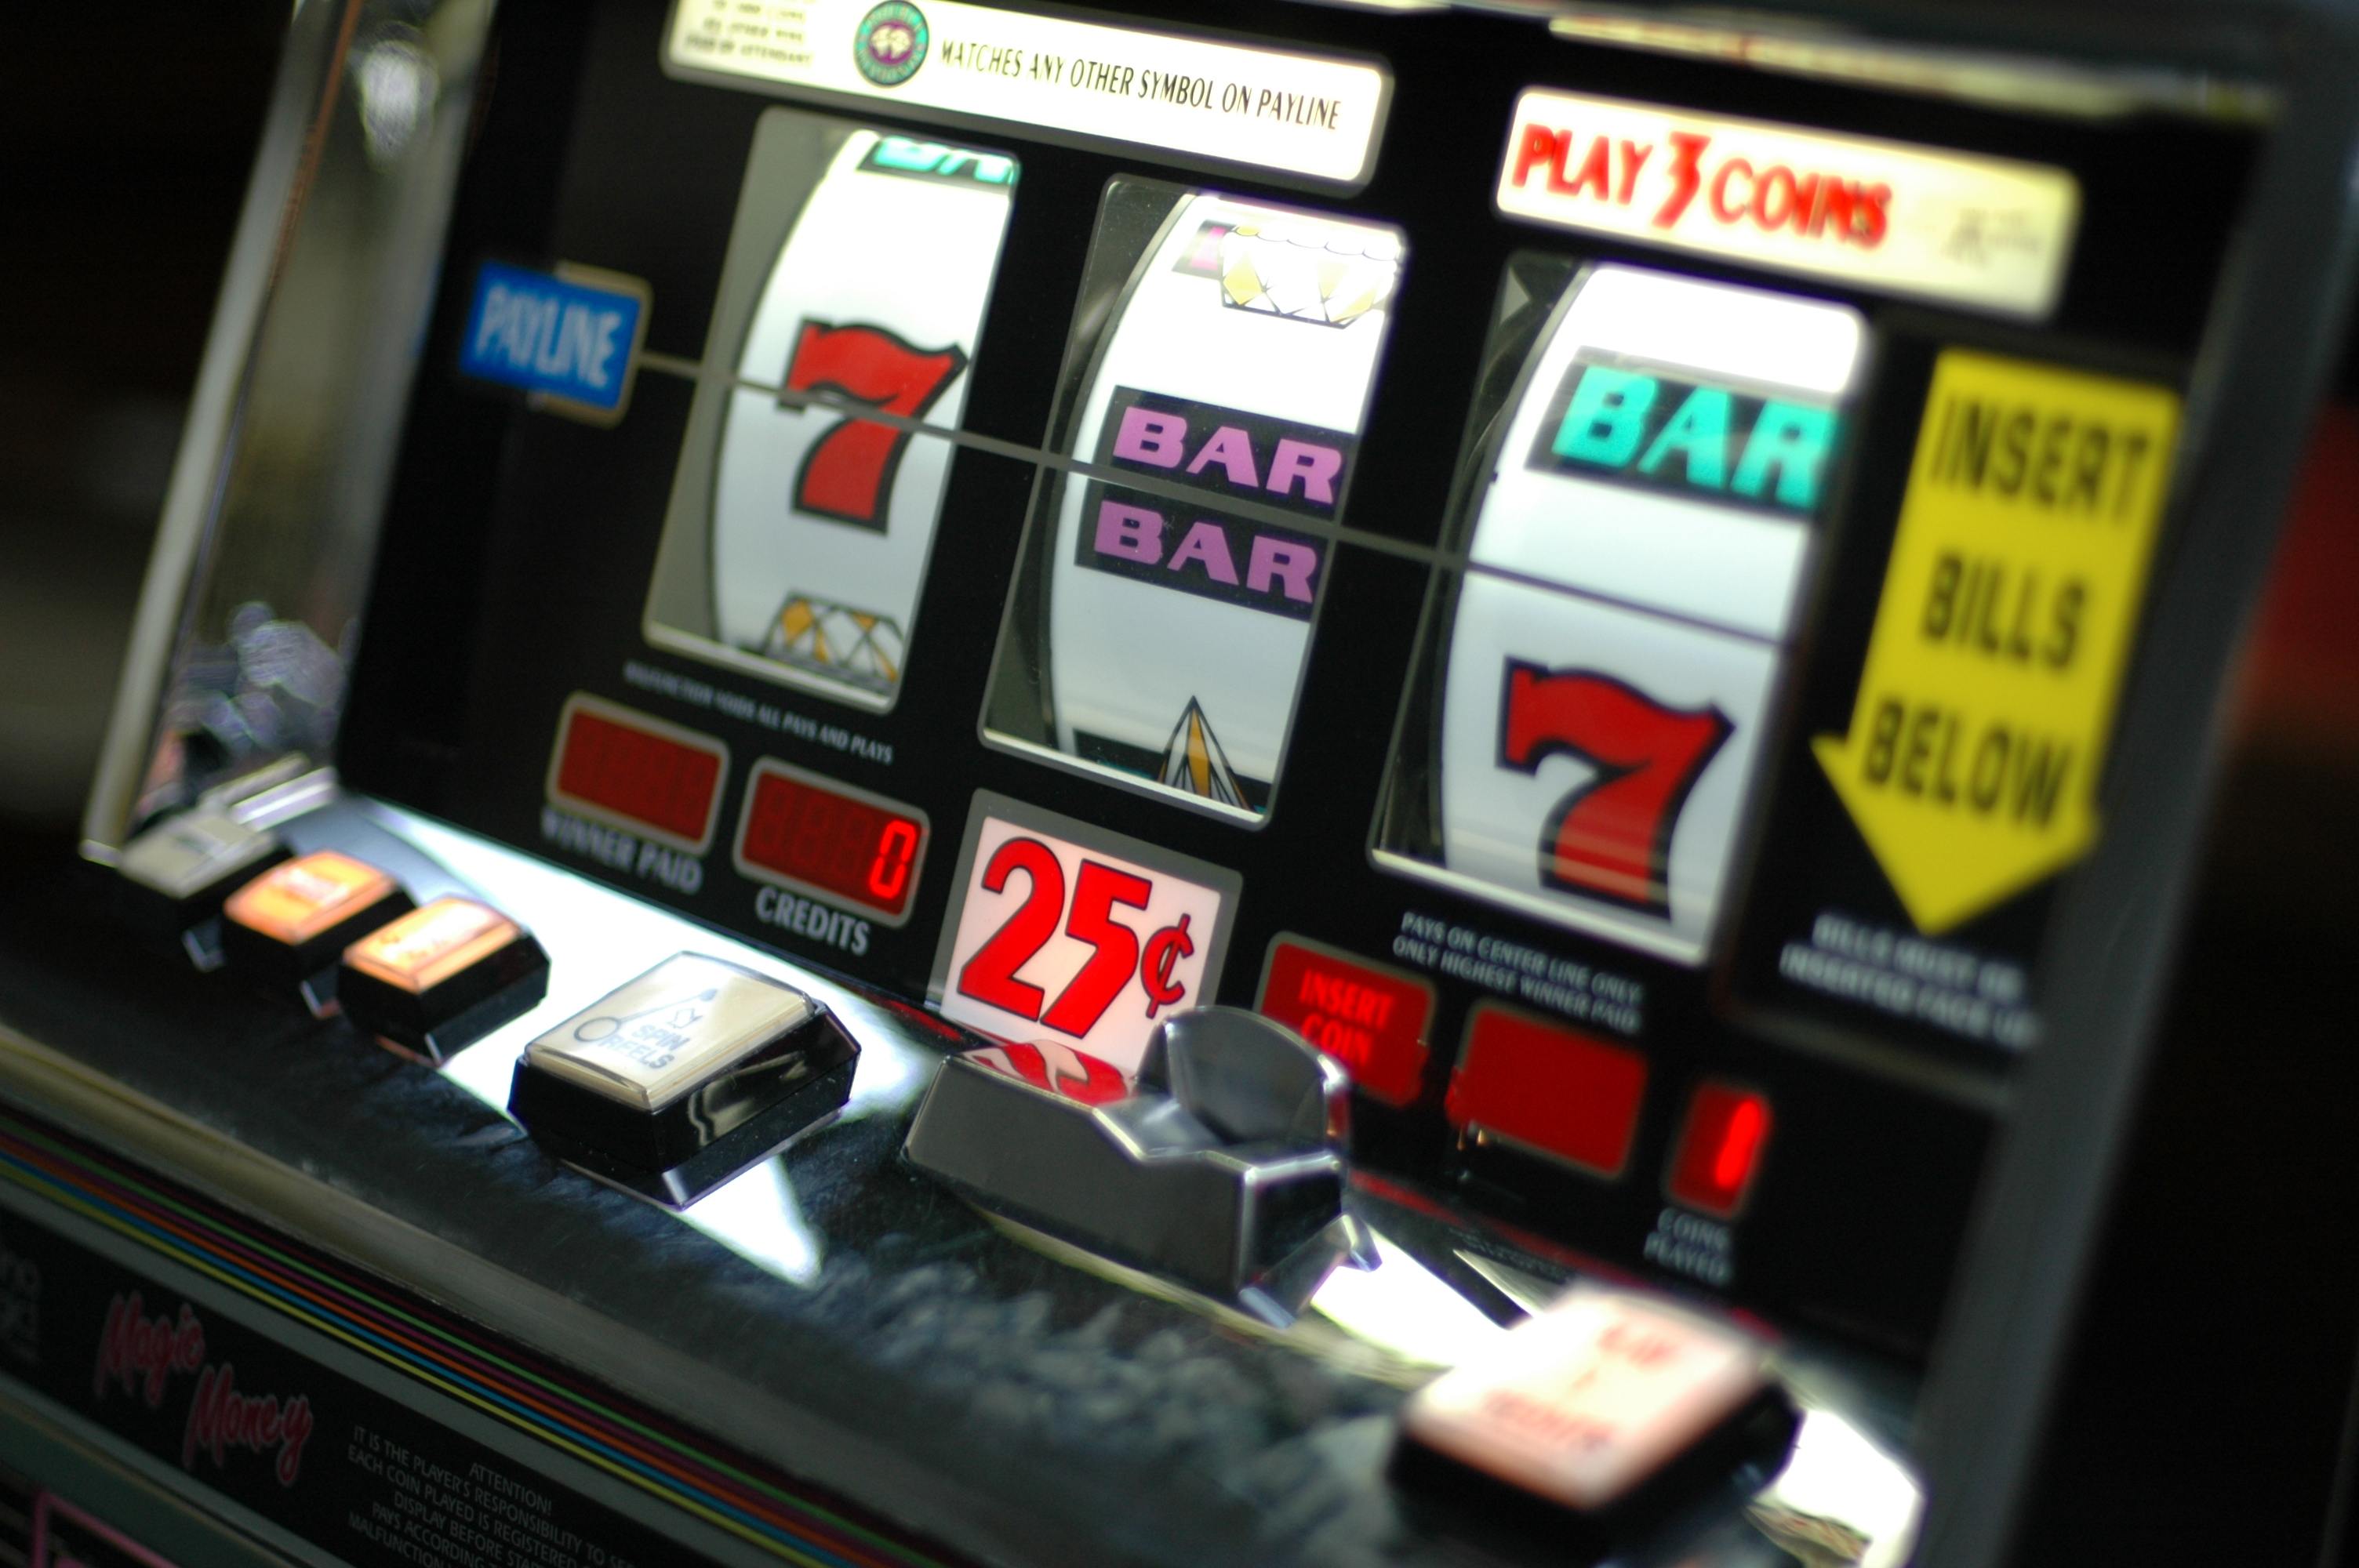 revenue on slot machines in bars